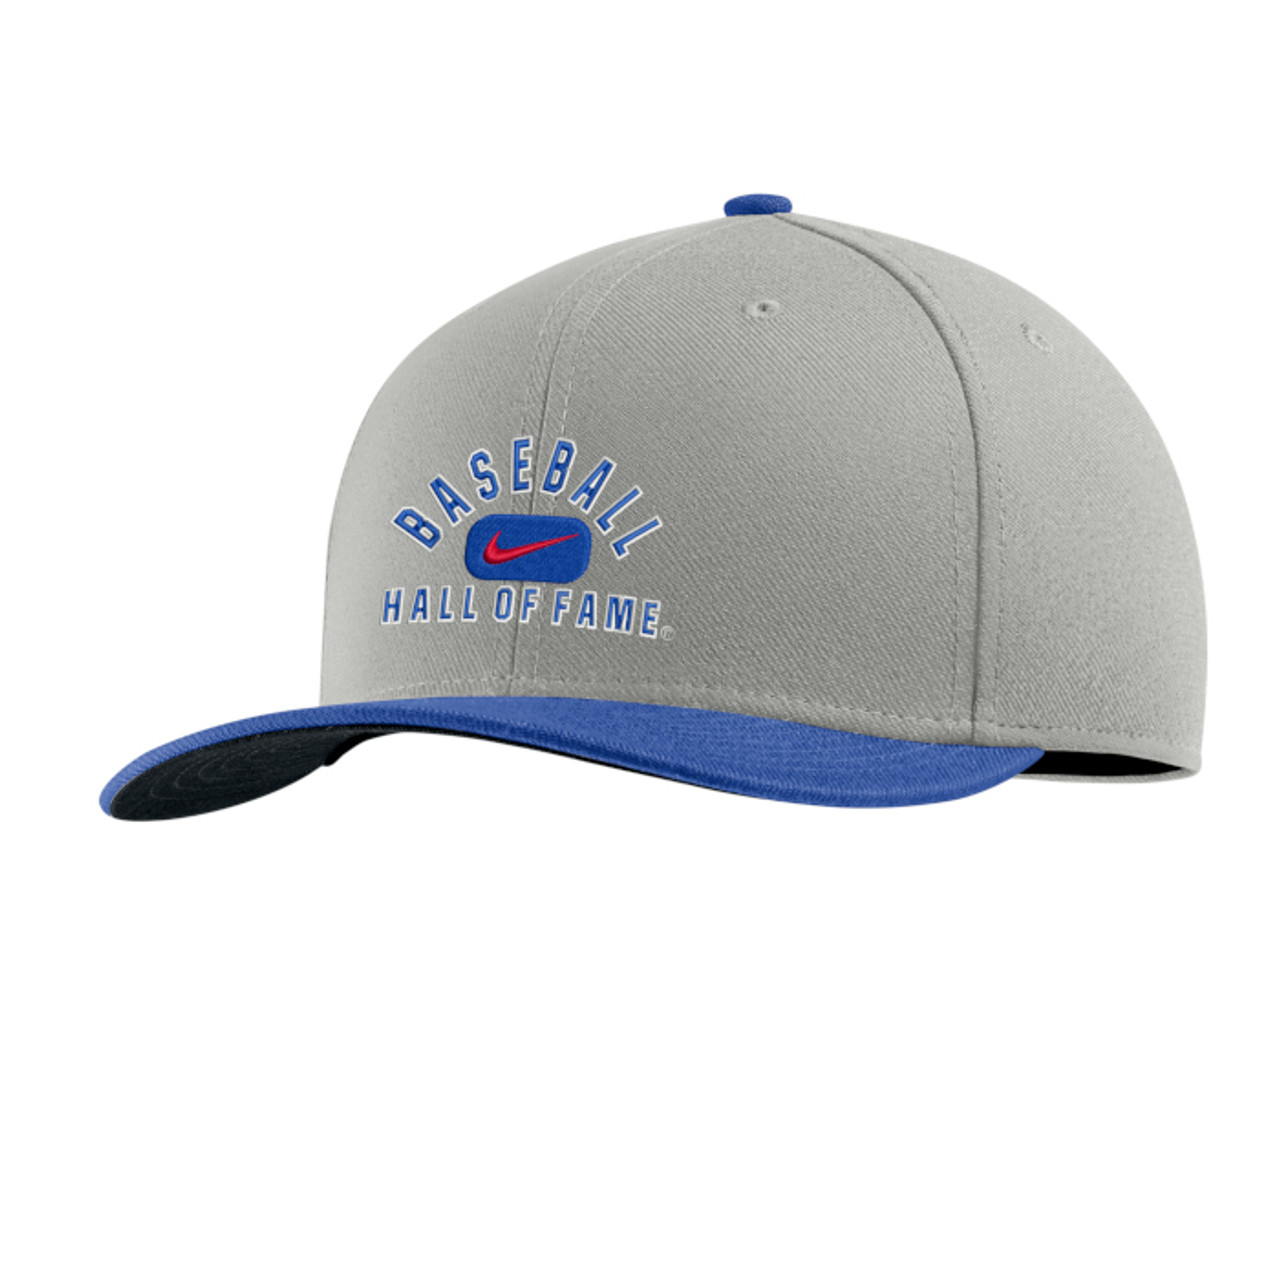 Nike Yankees Hat Cap Dry Fit Genuine Merchandise Size M/L